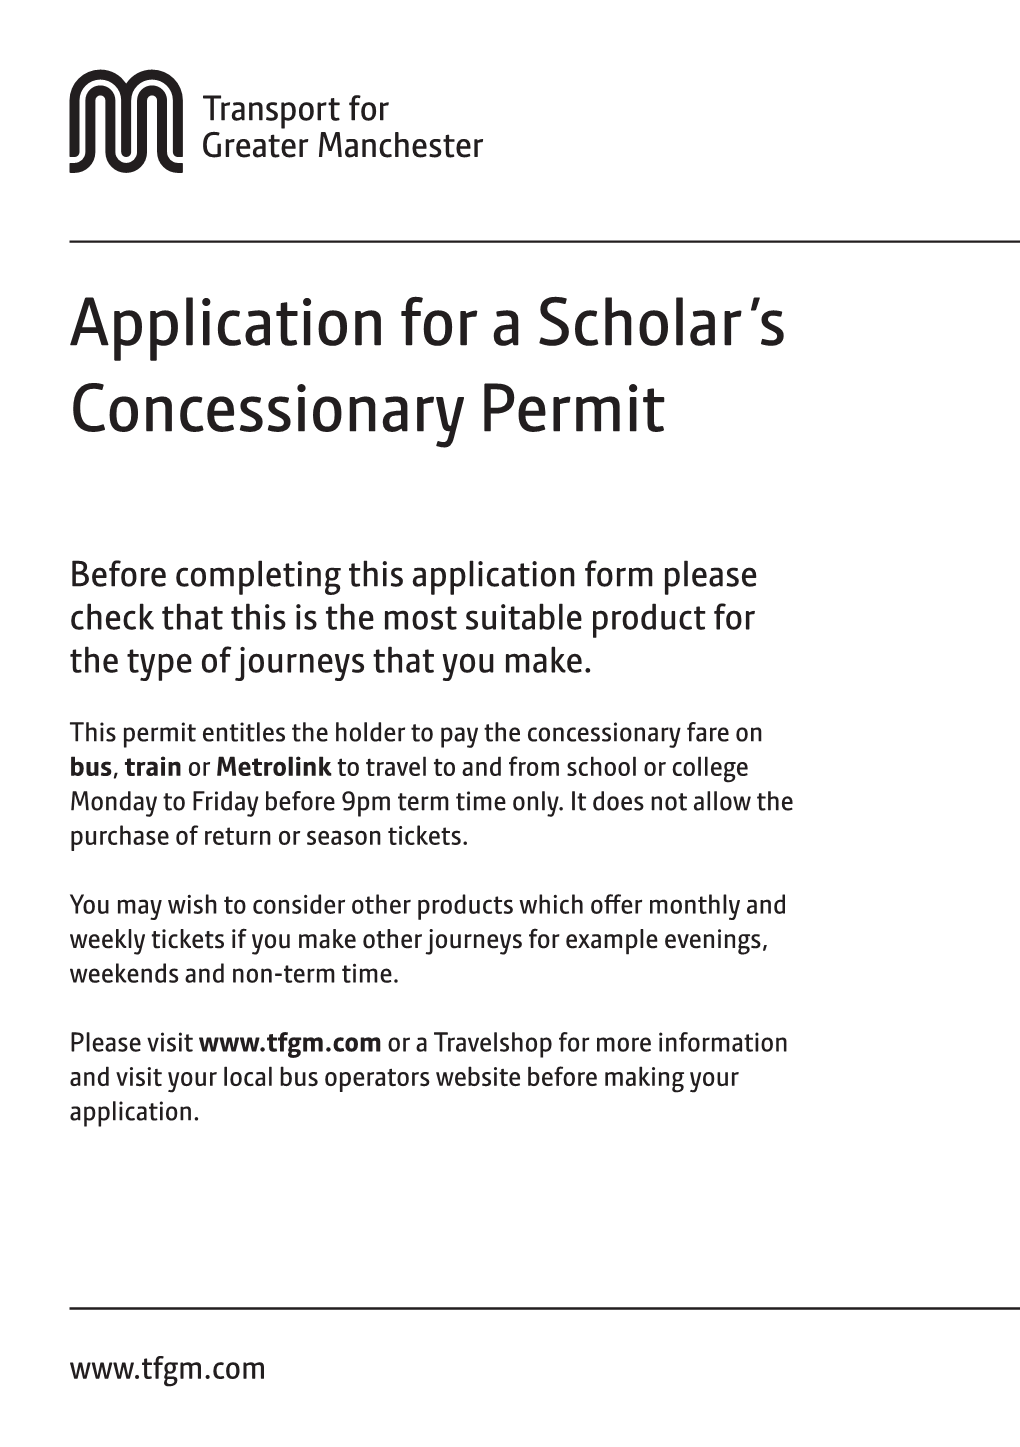 Application for a Scholar's Concessionary Permit